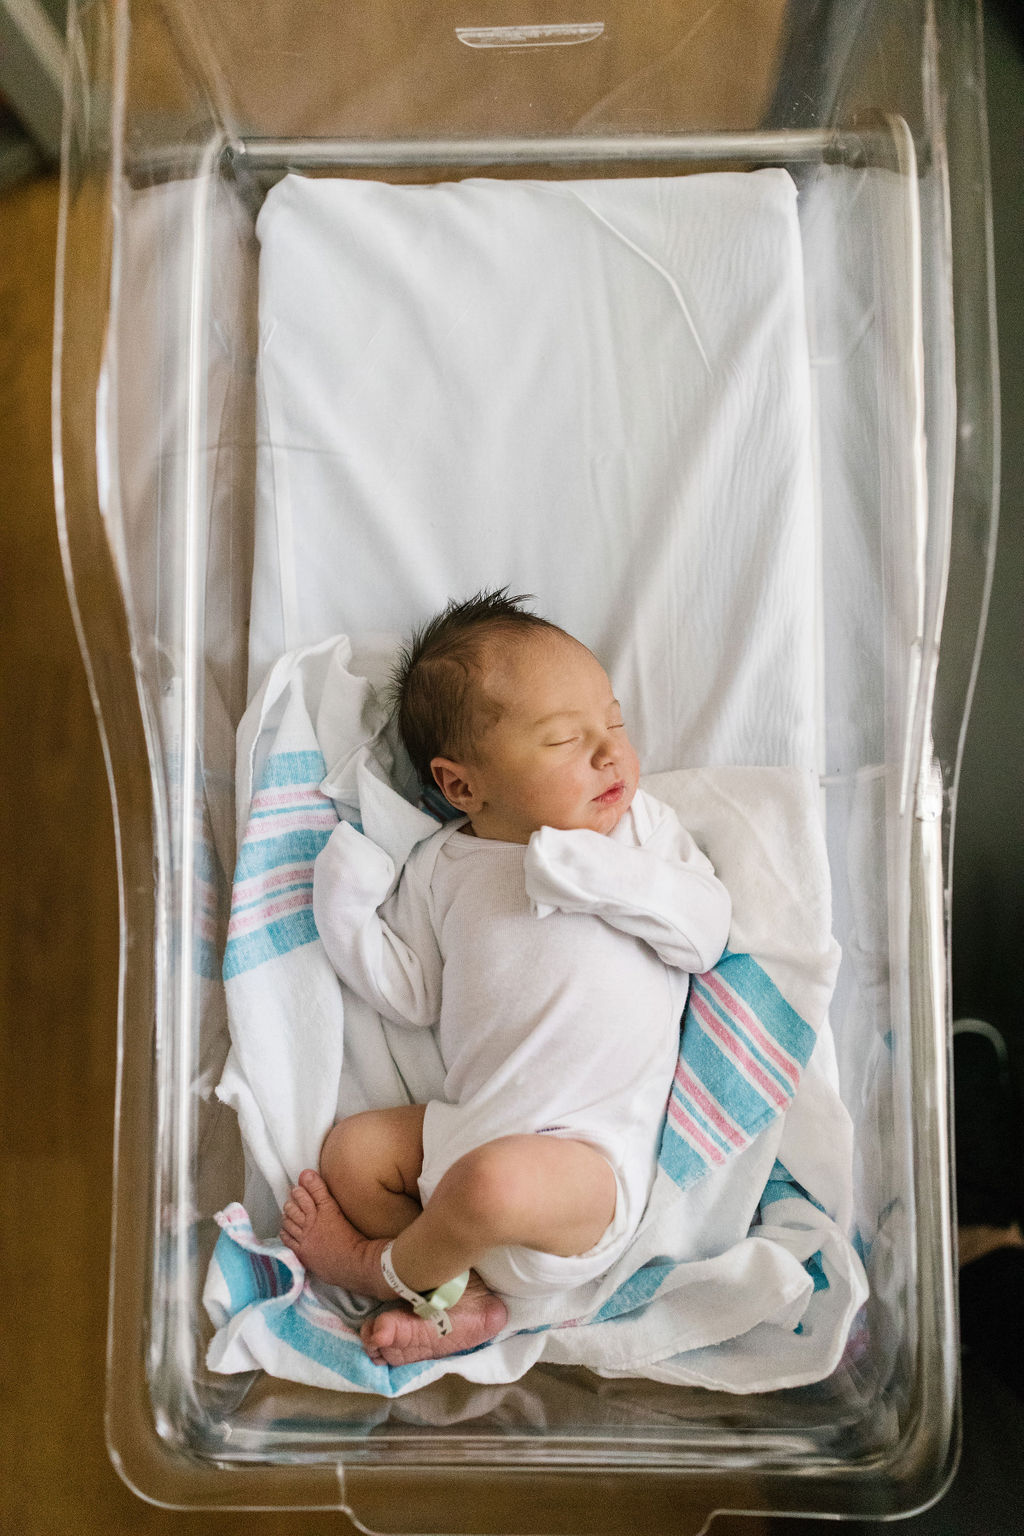 Elle Baker Photography captures beautiful baby boy in hospital bassinet